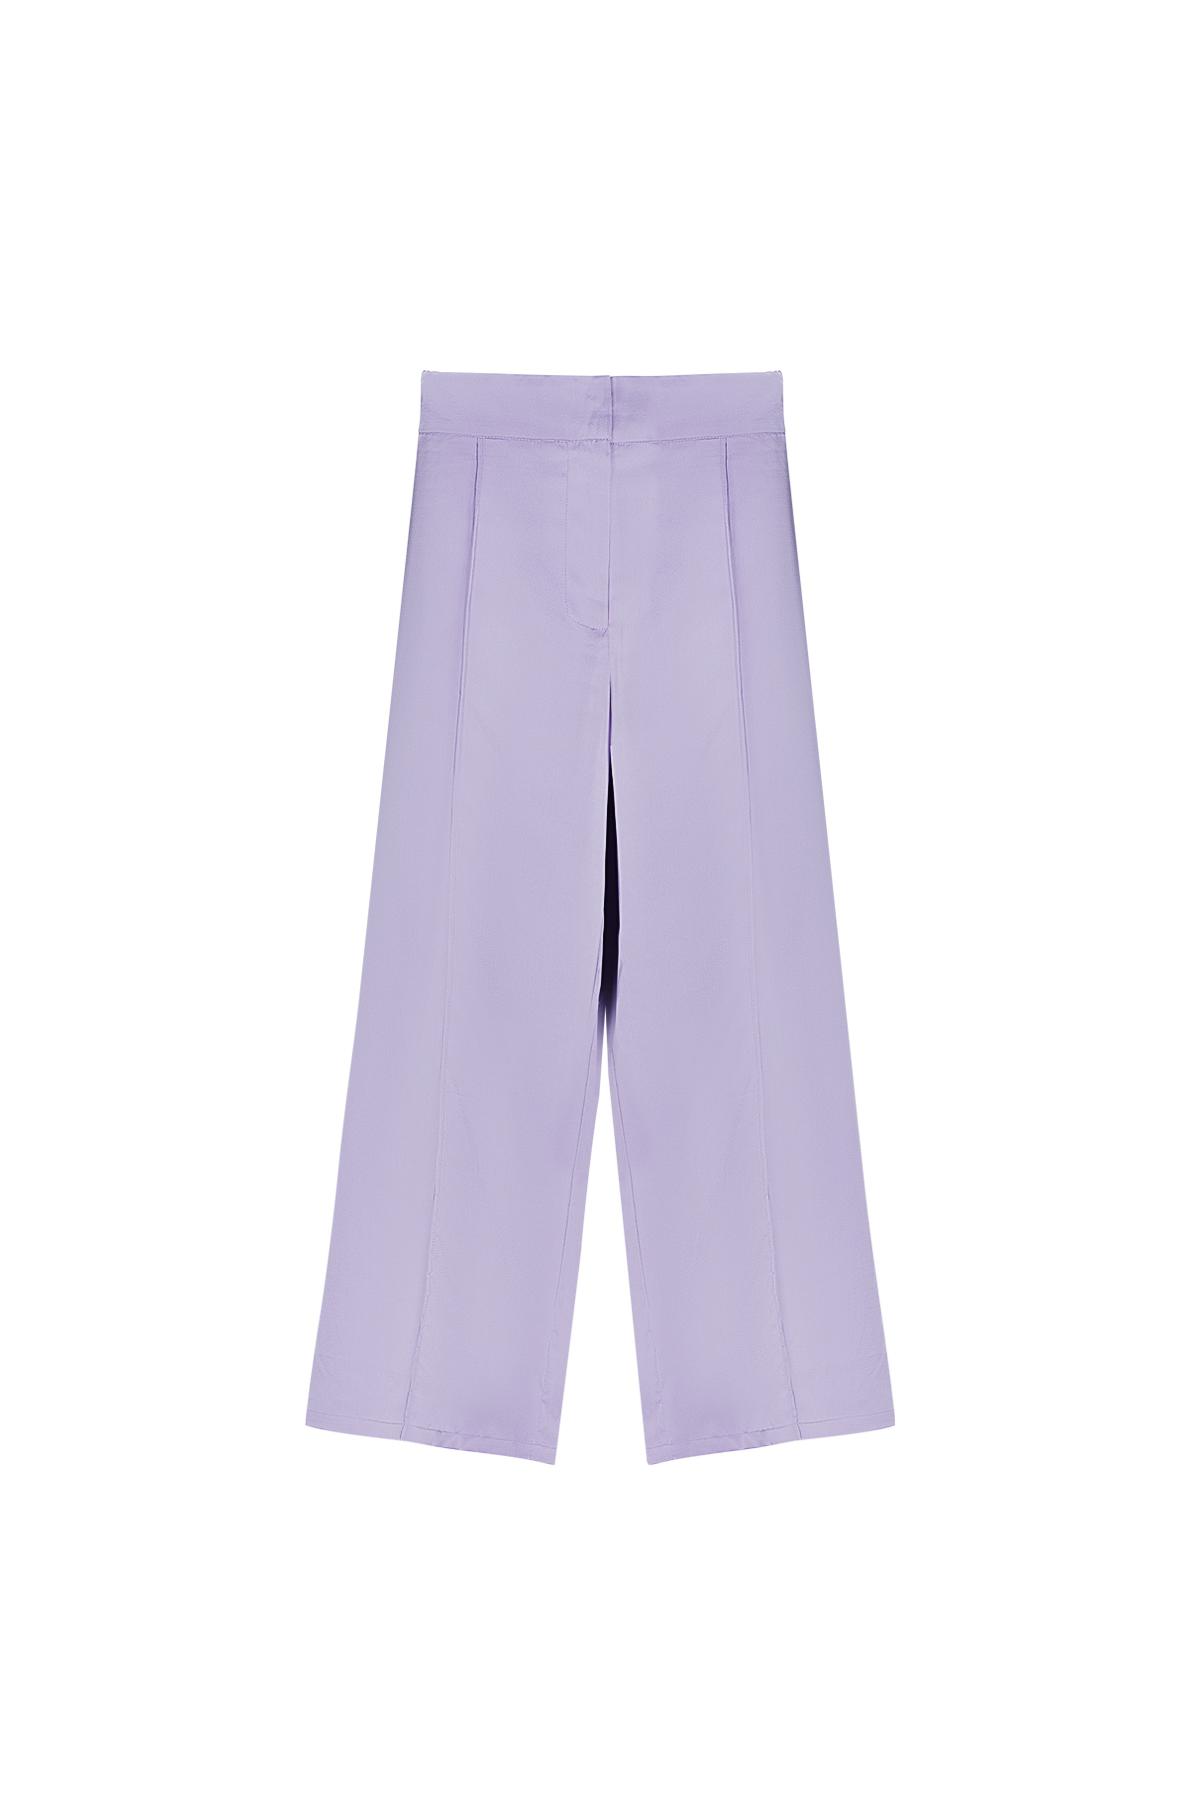 Pantalon tissu brillant Violet M 